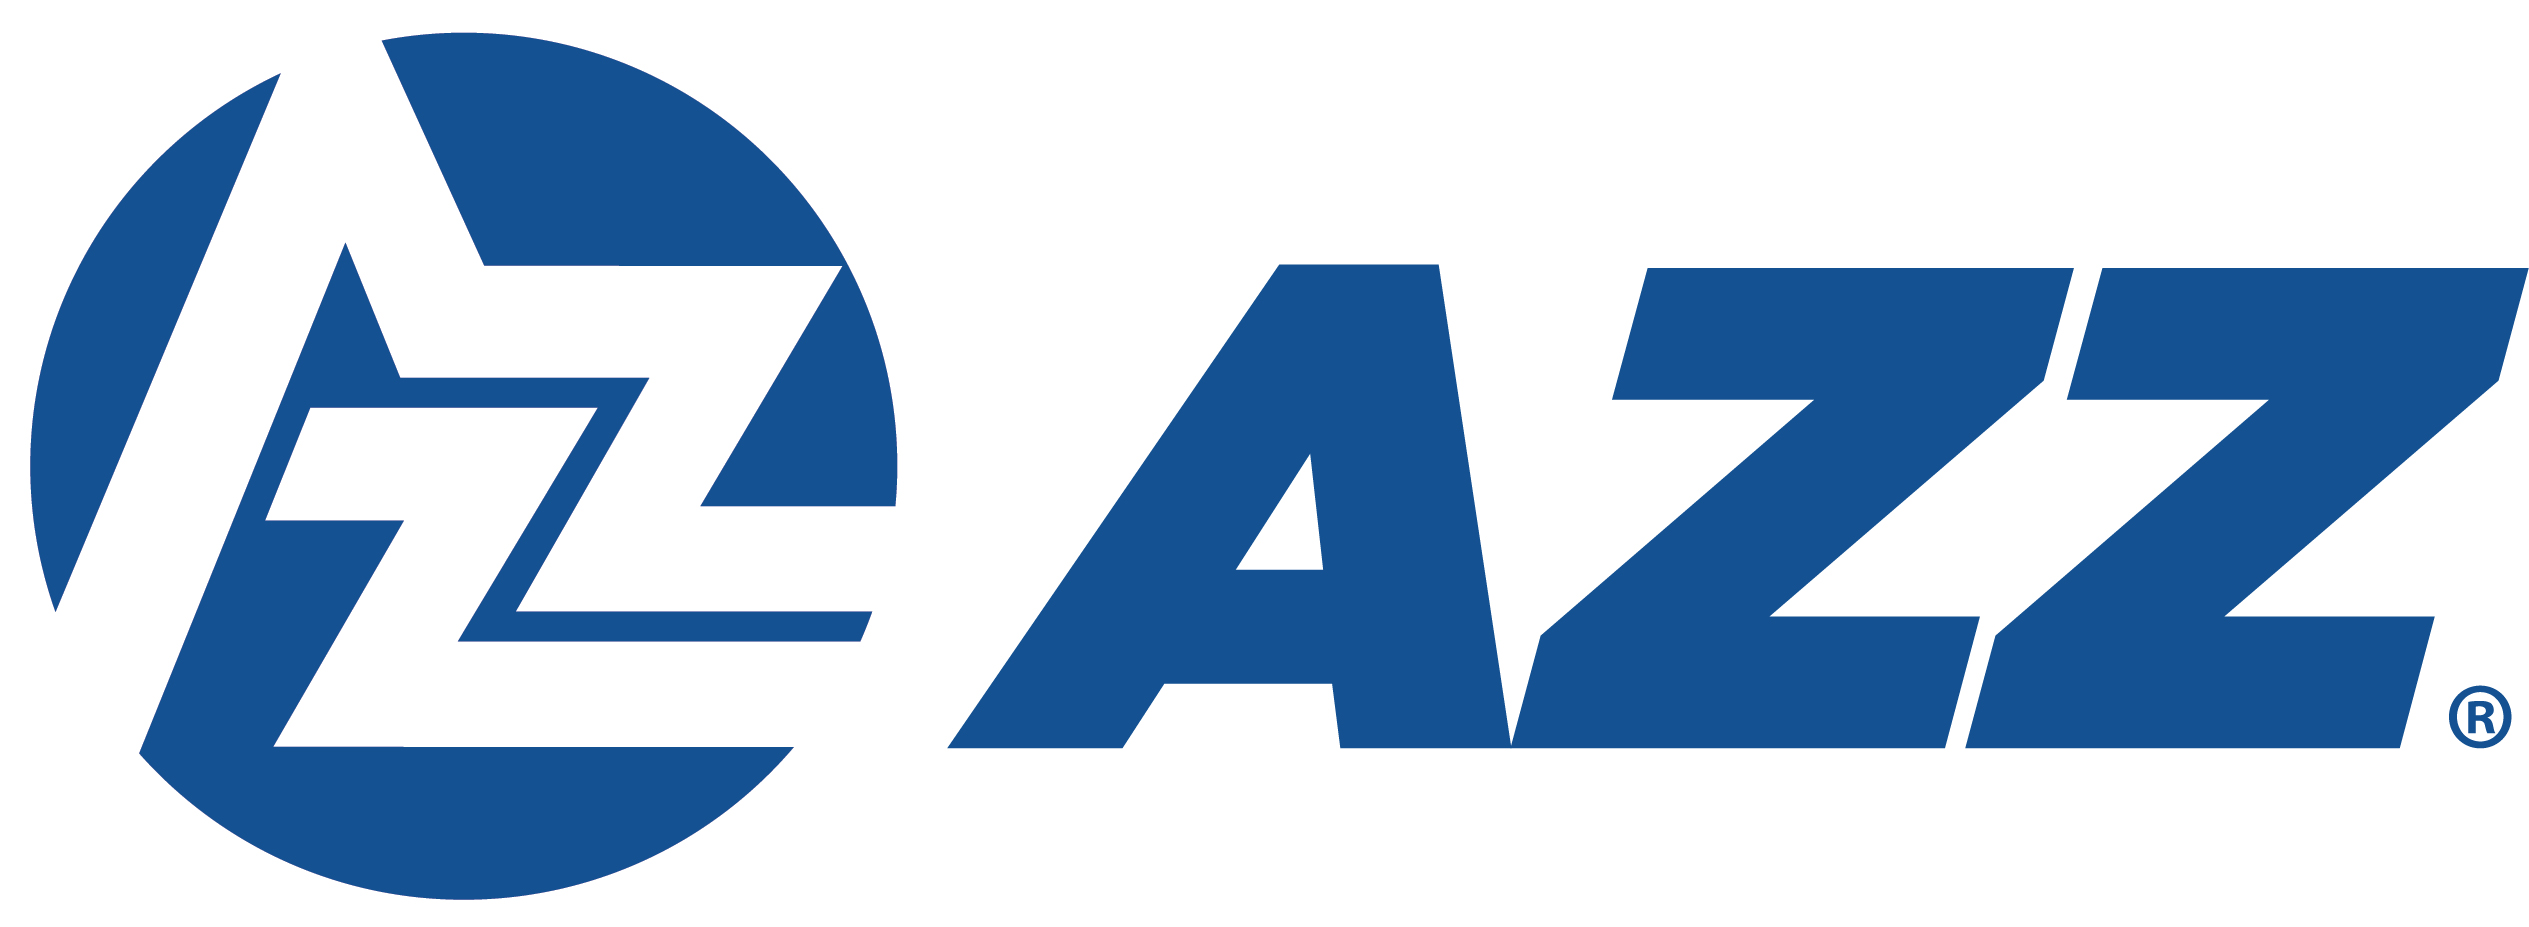 azz-20221130_g1.jpg